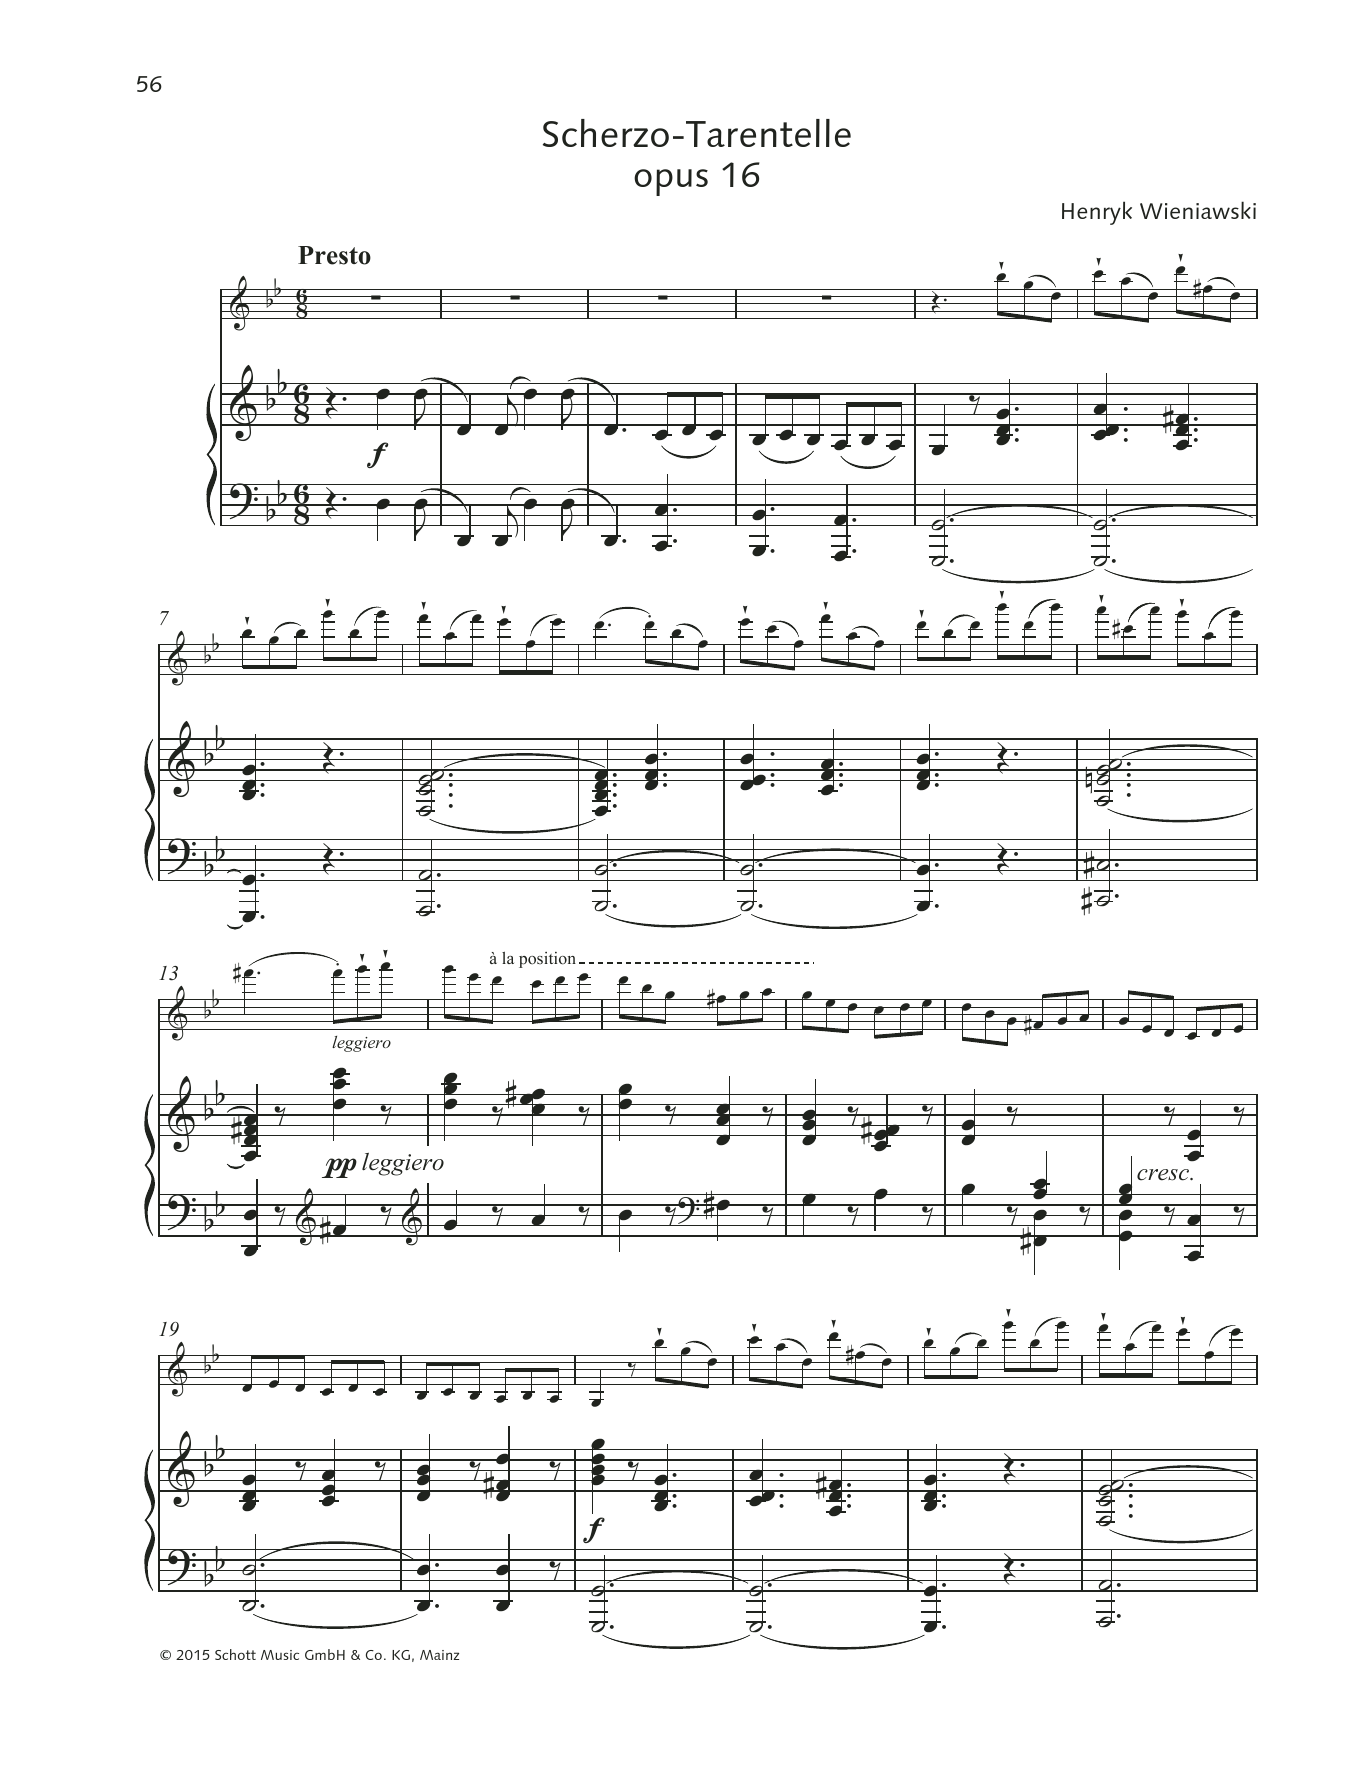 Download Henryk Wieniawski Scherzo-Tarantelle Sheet Music and learn how to play String Solo PDF digital score in minutes